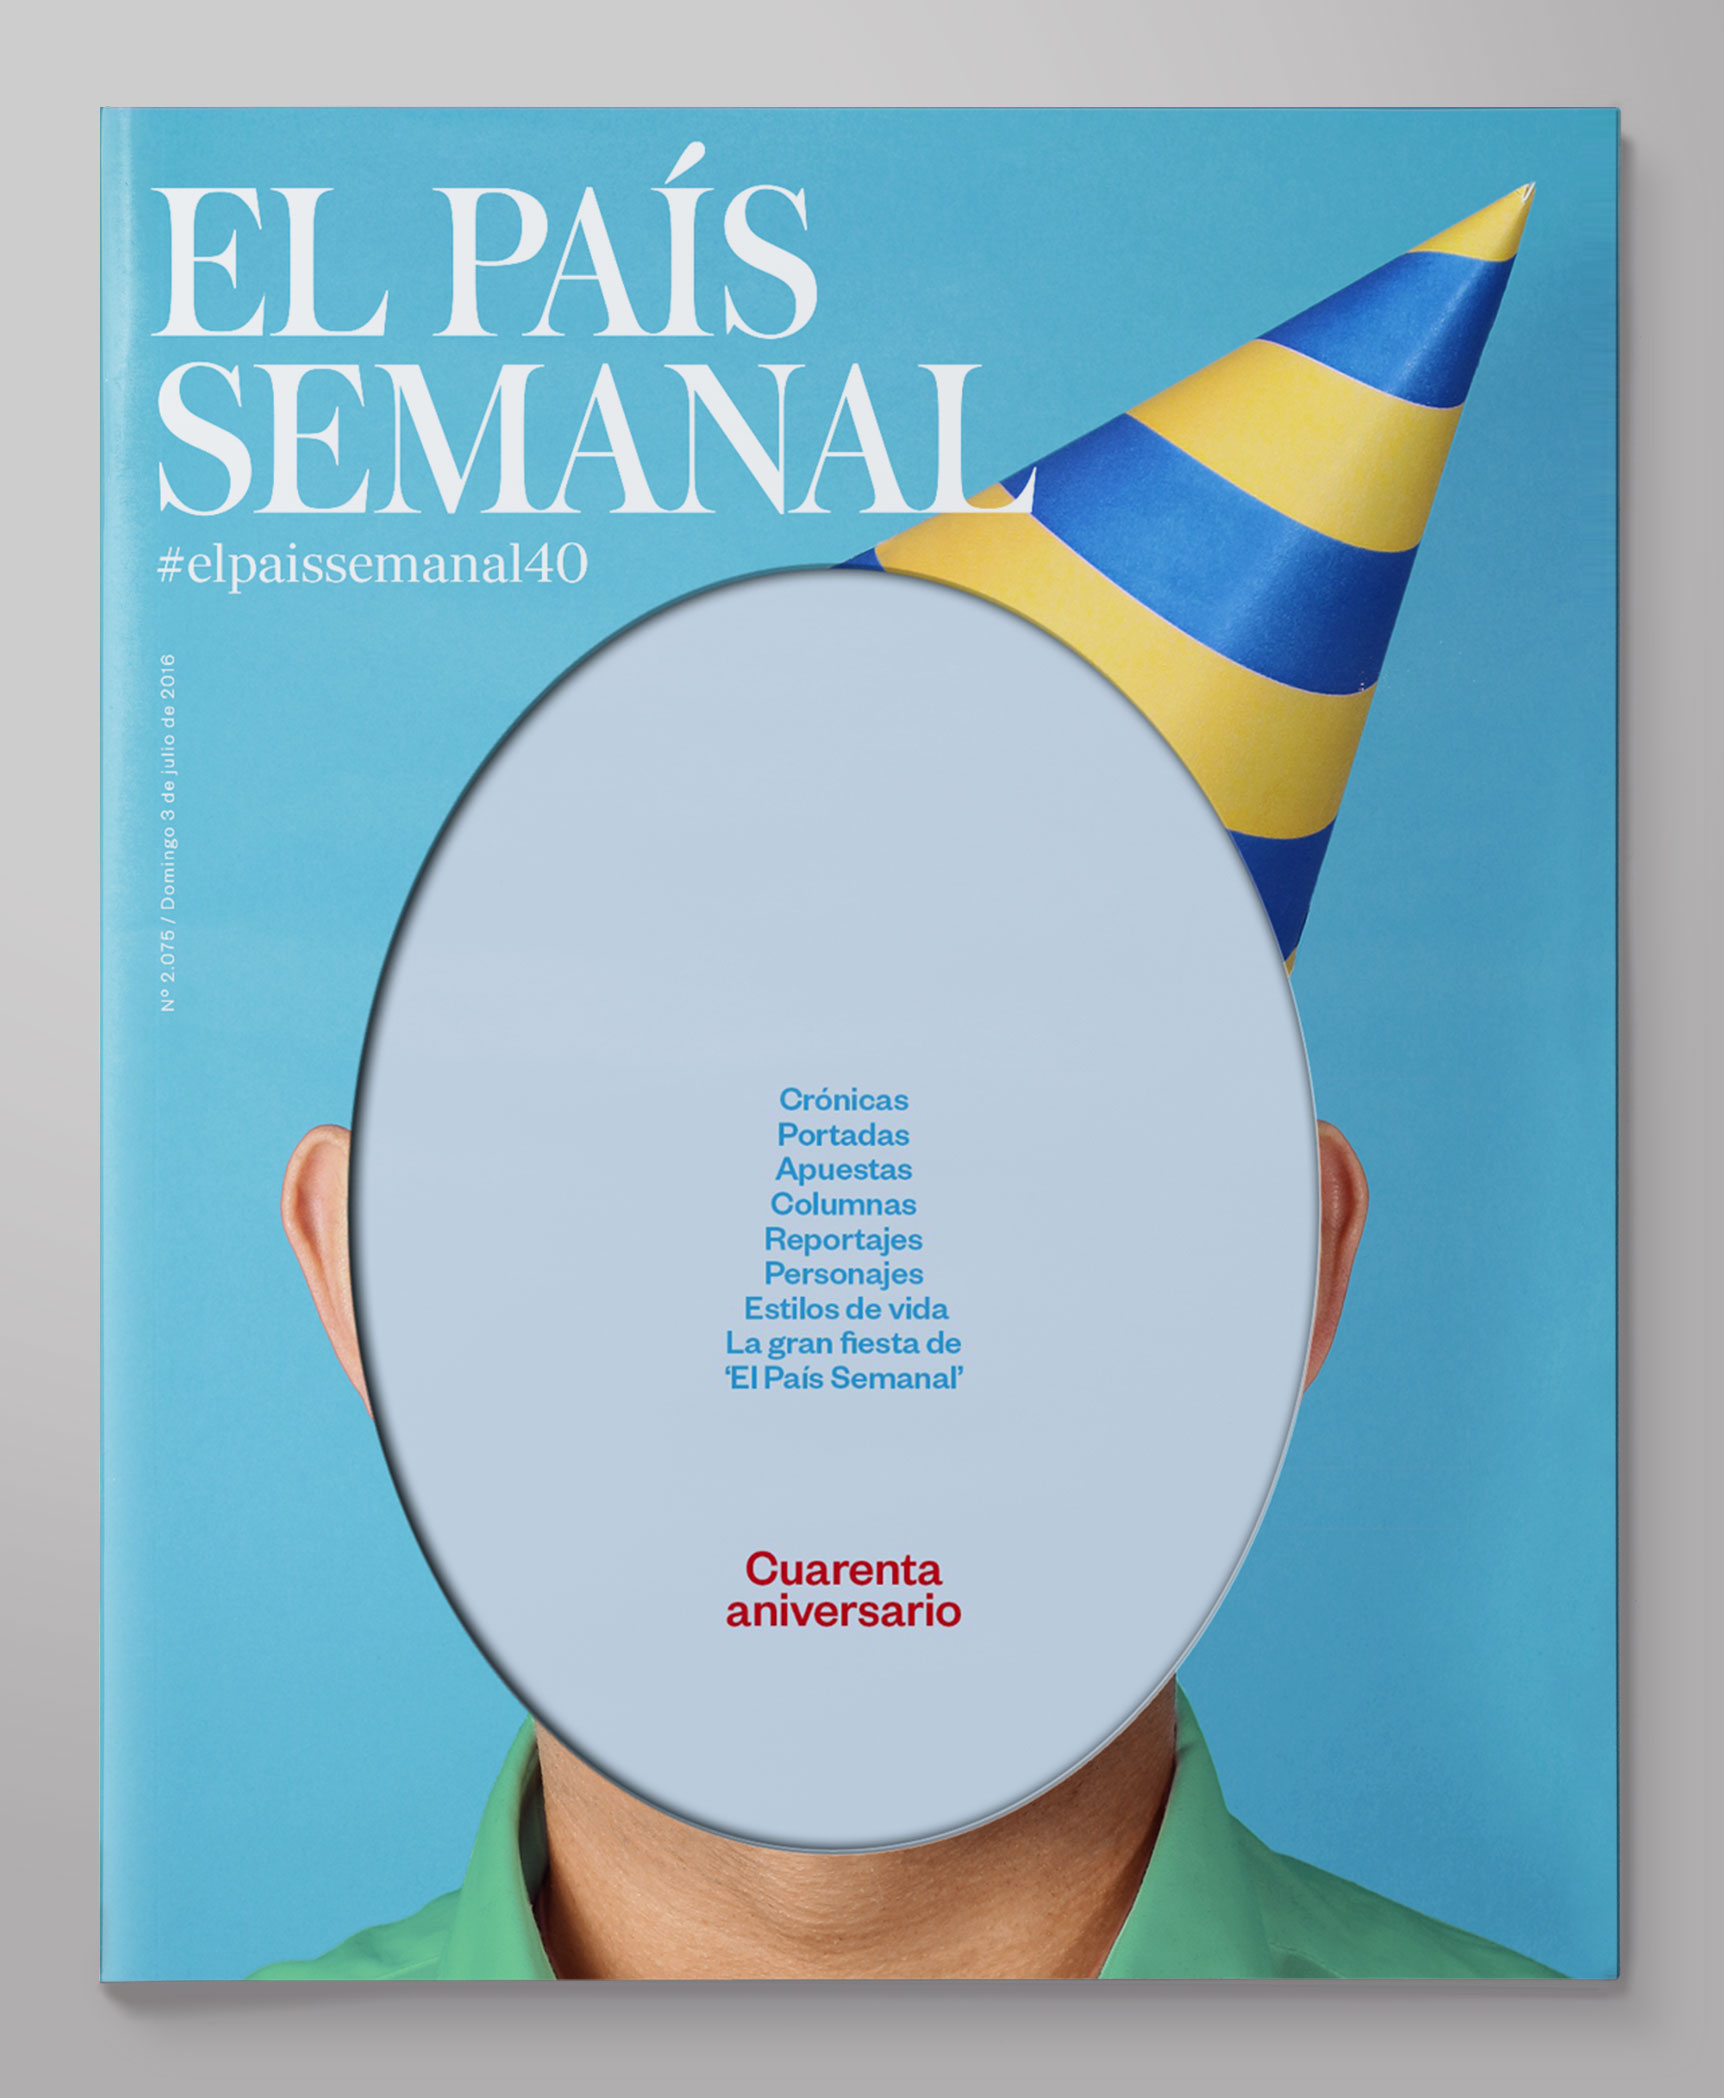 30/10/16 El País Semanal — 40 Anniversary Issue. (II) - javierjaen.com